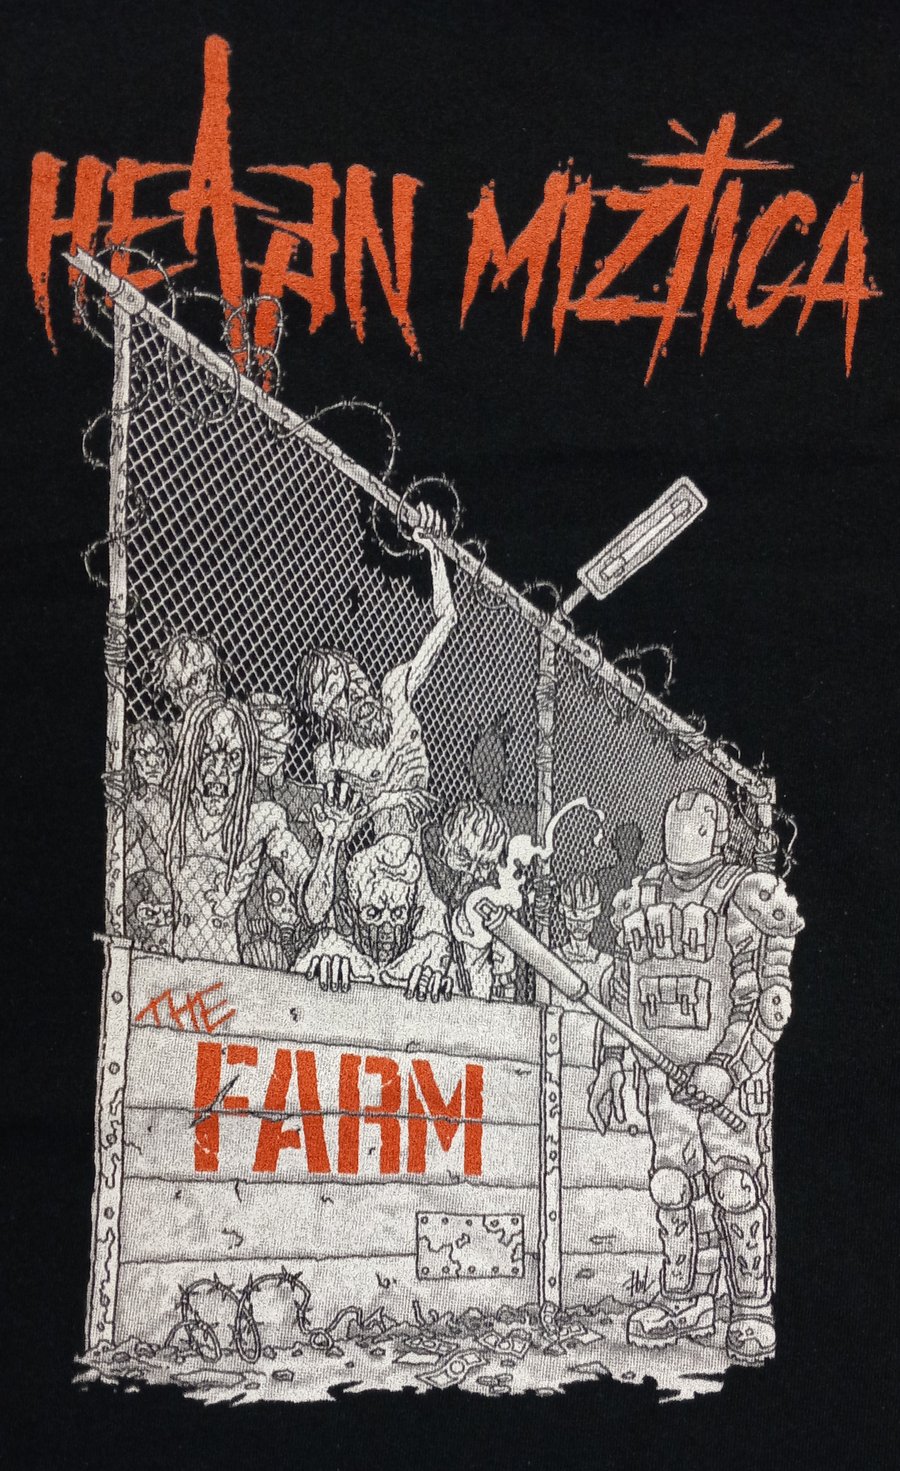 Image of HEAVEN / MIZTICA : THE FARM Shirt